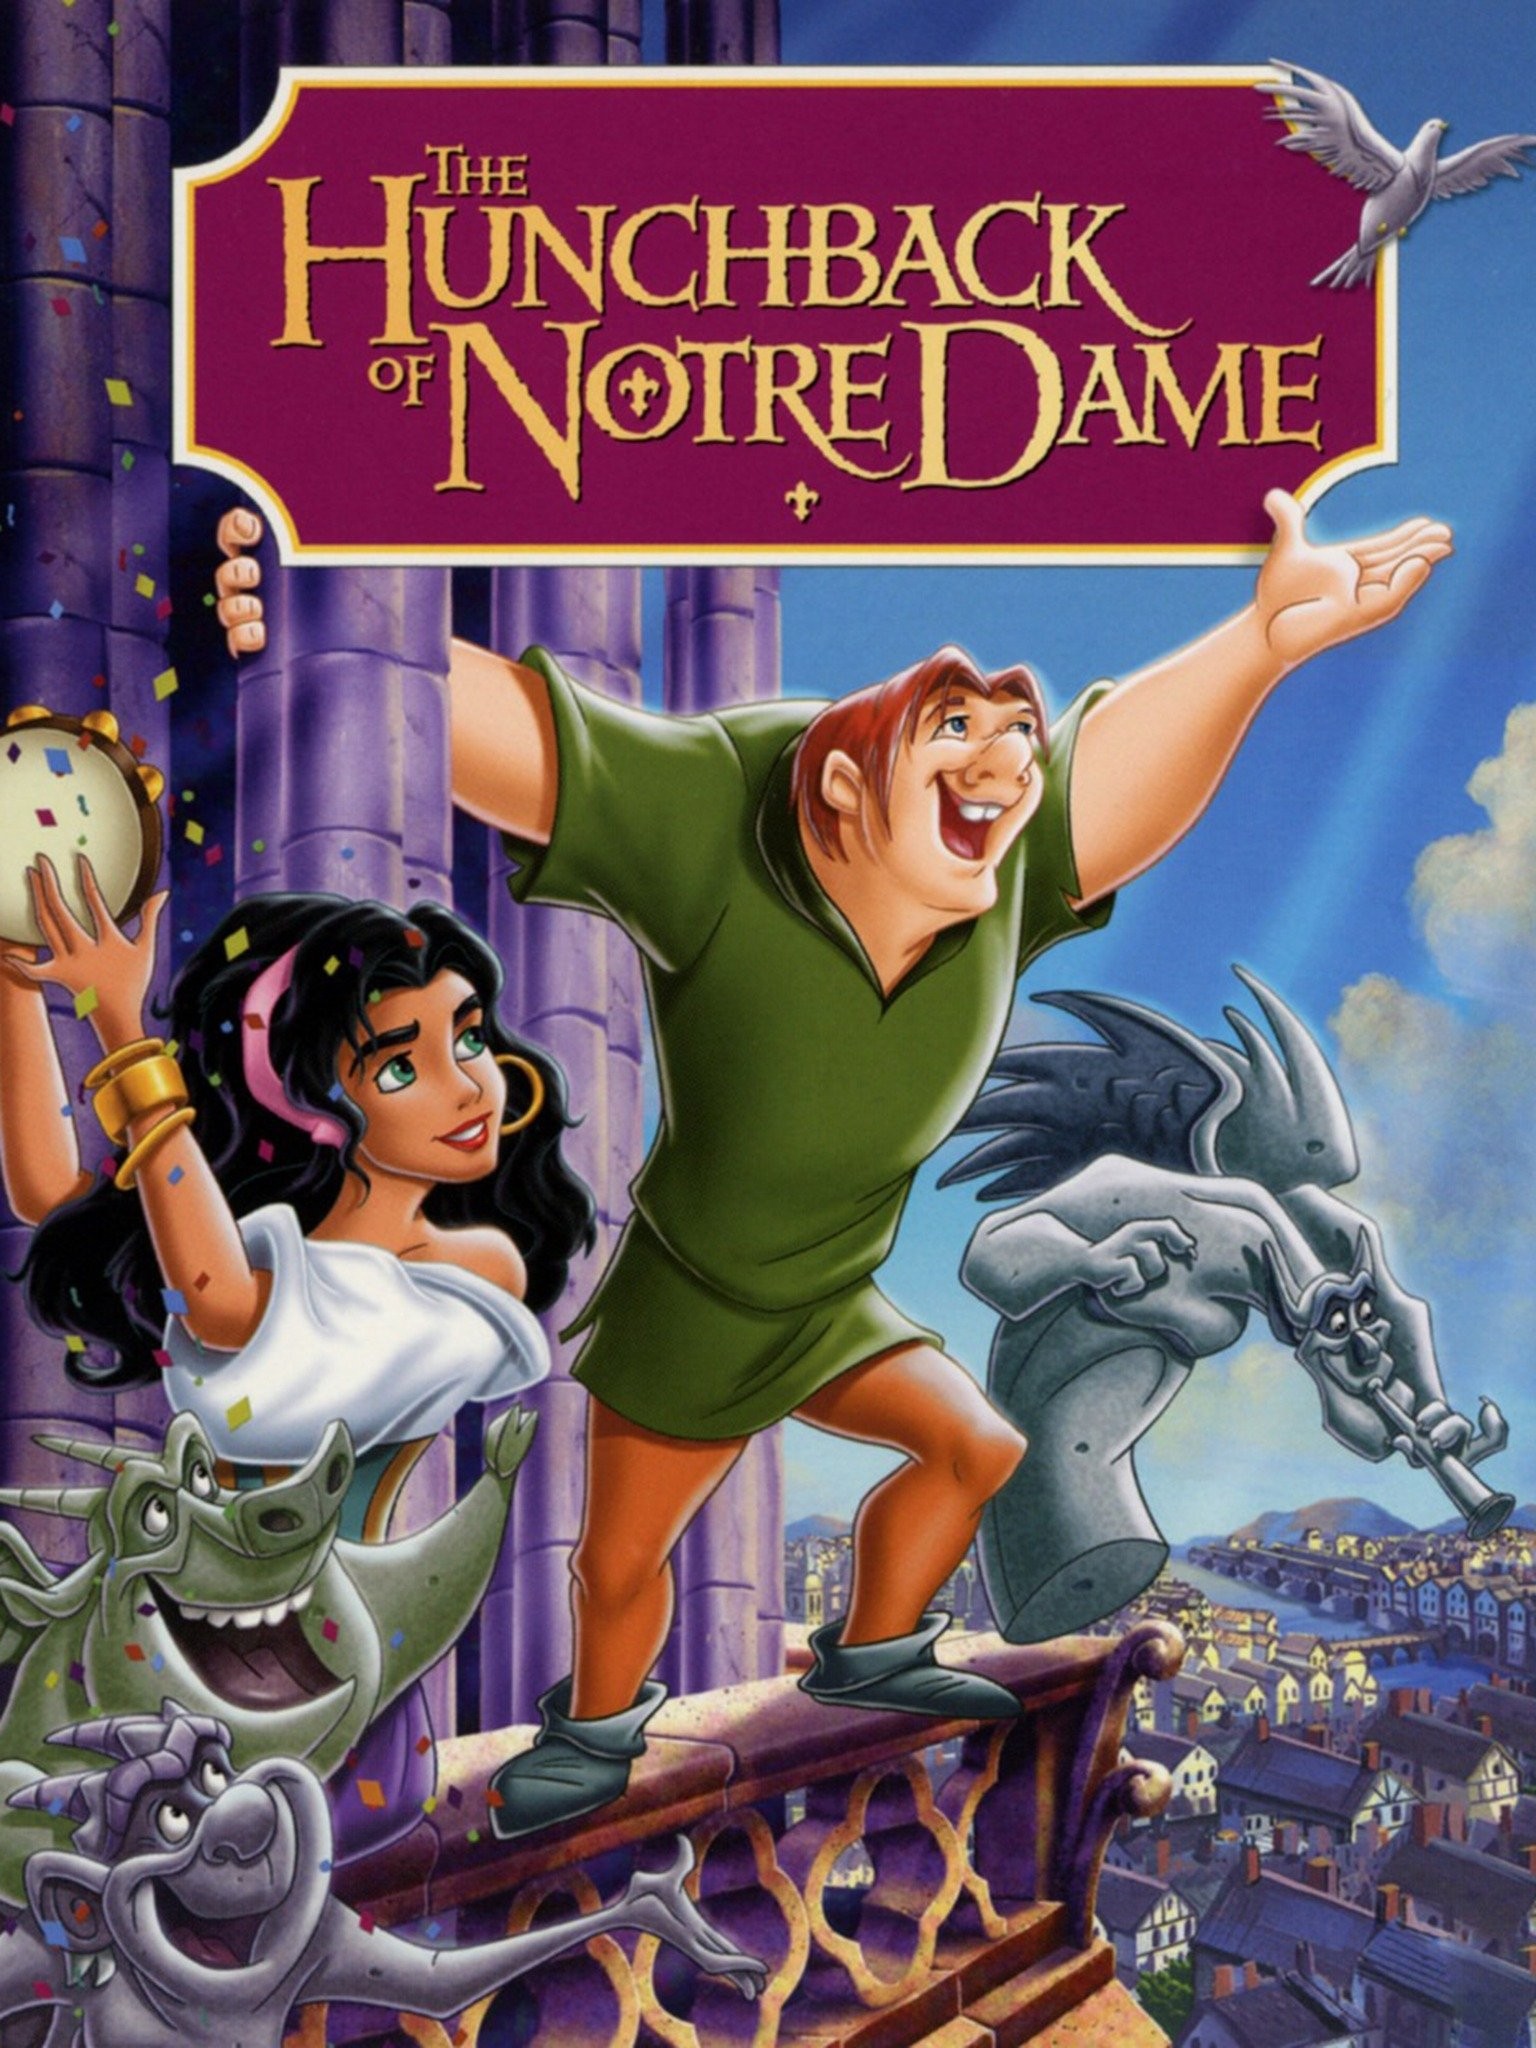 Notre-Dame (TV Mini Series 2022) - IMDb